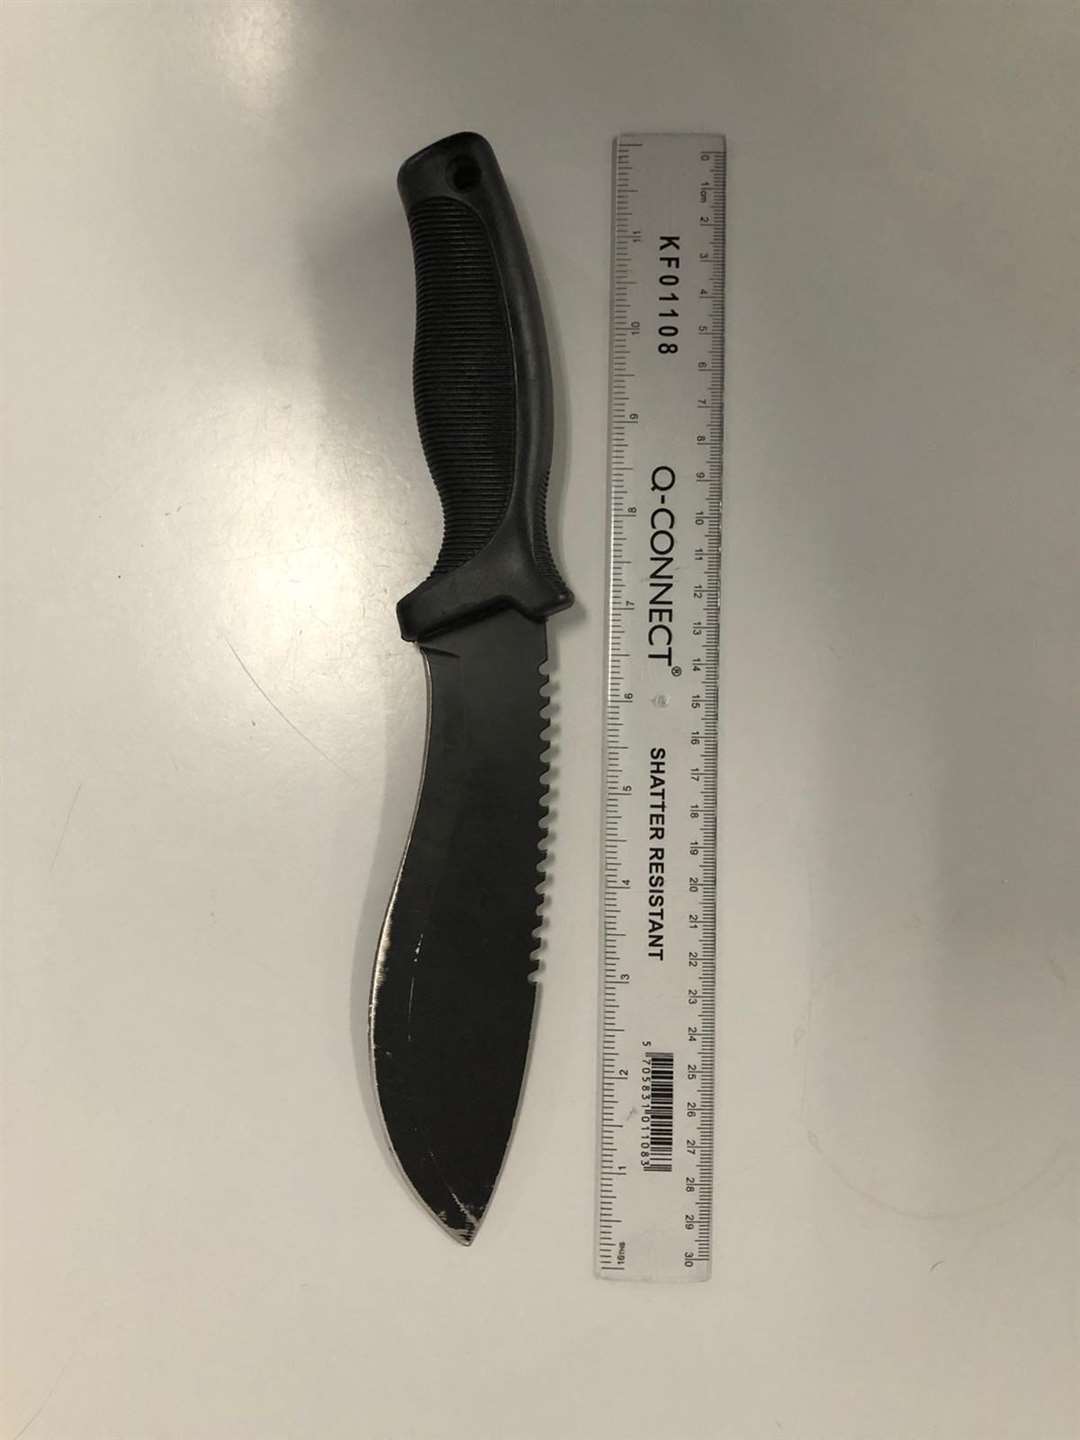 The knife found at Ashford International